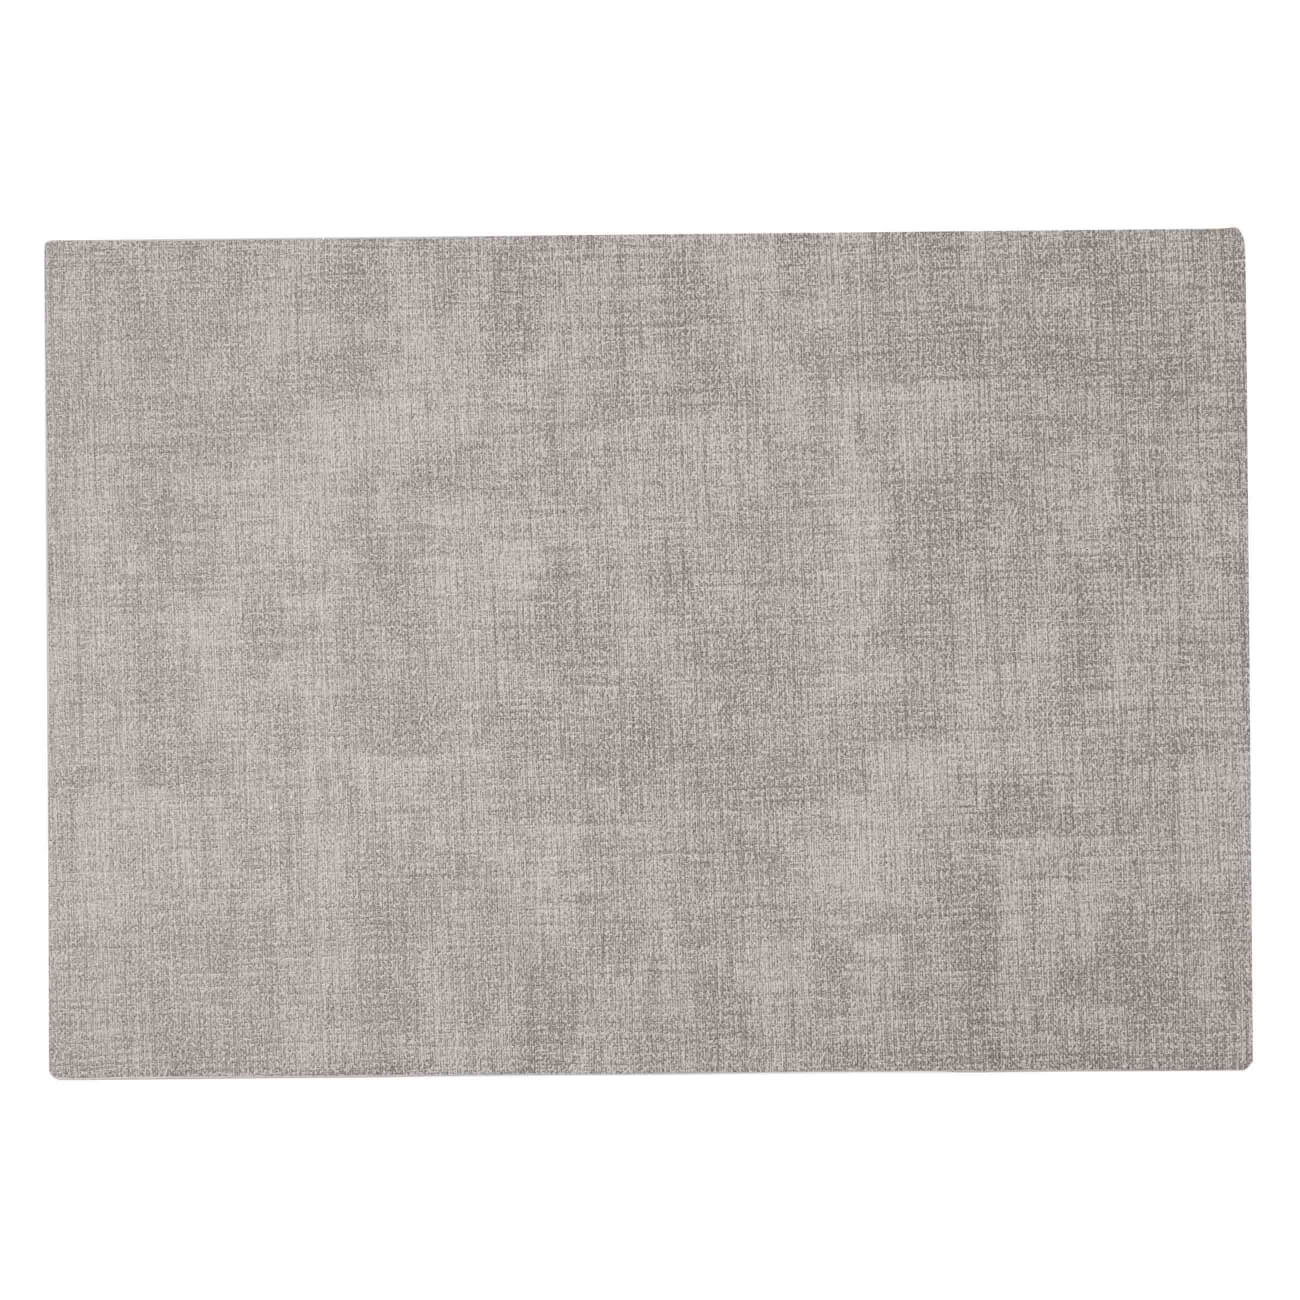 Napkin for appliances, 30x43 cm, polyurethane, rectangular, gray-beige, Rock изображение № 1